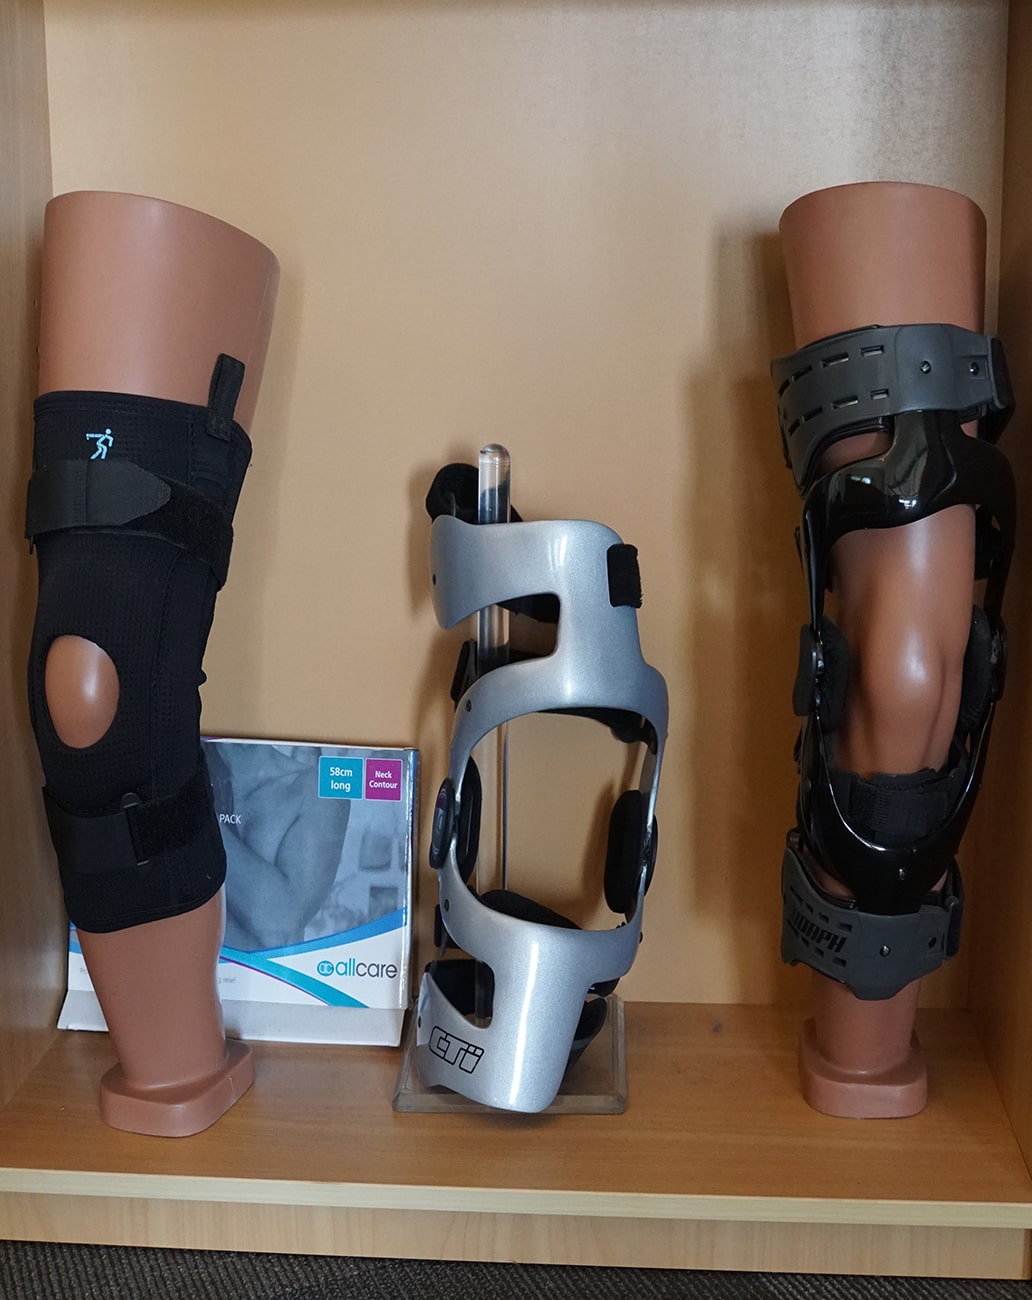 Ankle, Wrist & Knee Braces  Knee Support & Compression Bracing